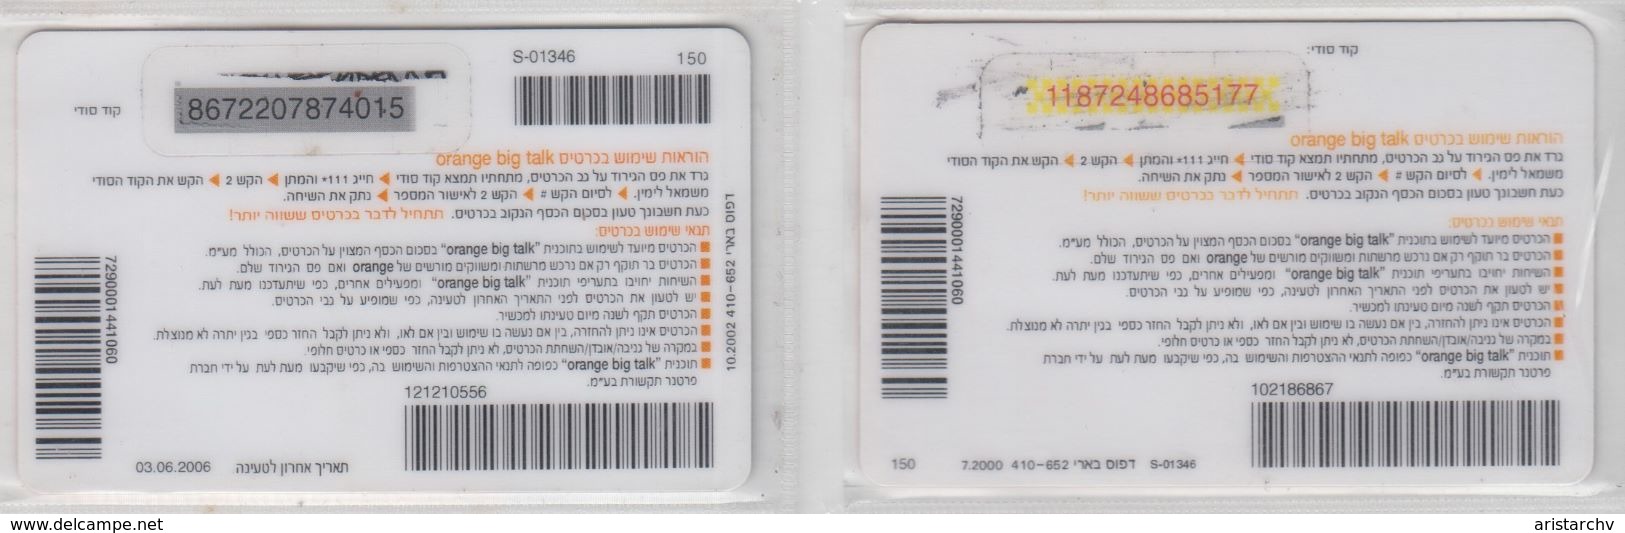 ISRAEL 2002 ORANGE BIG TALK 150 SHEKELS 2 DIFFERENT CARDS - Israel